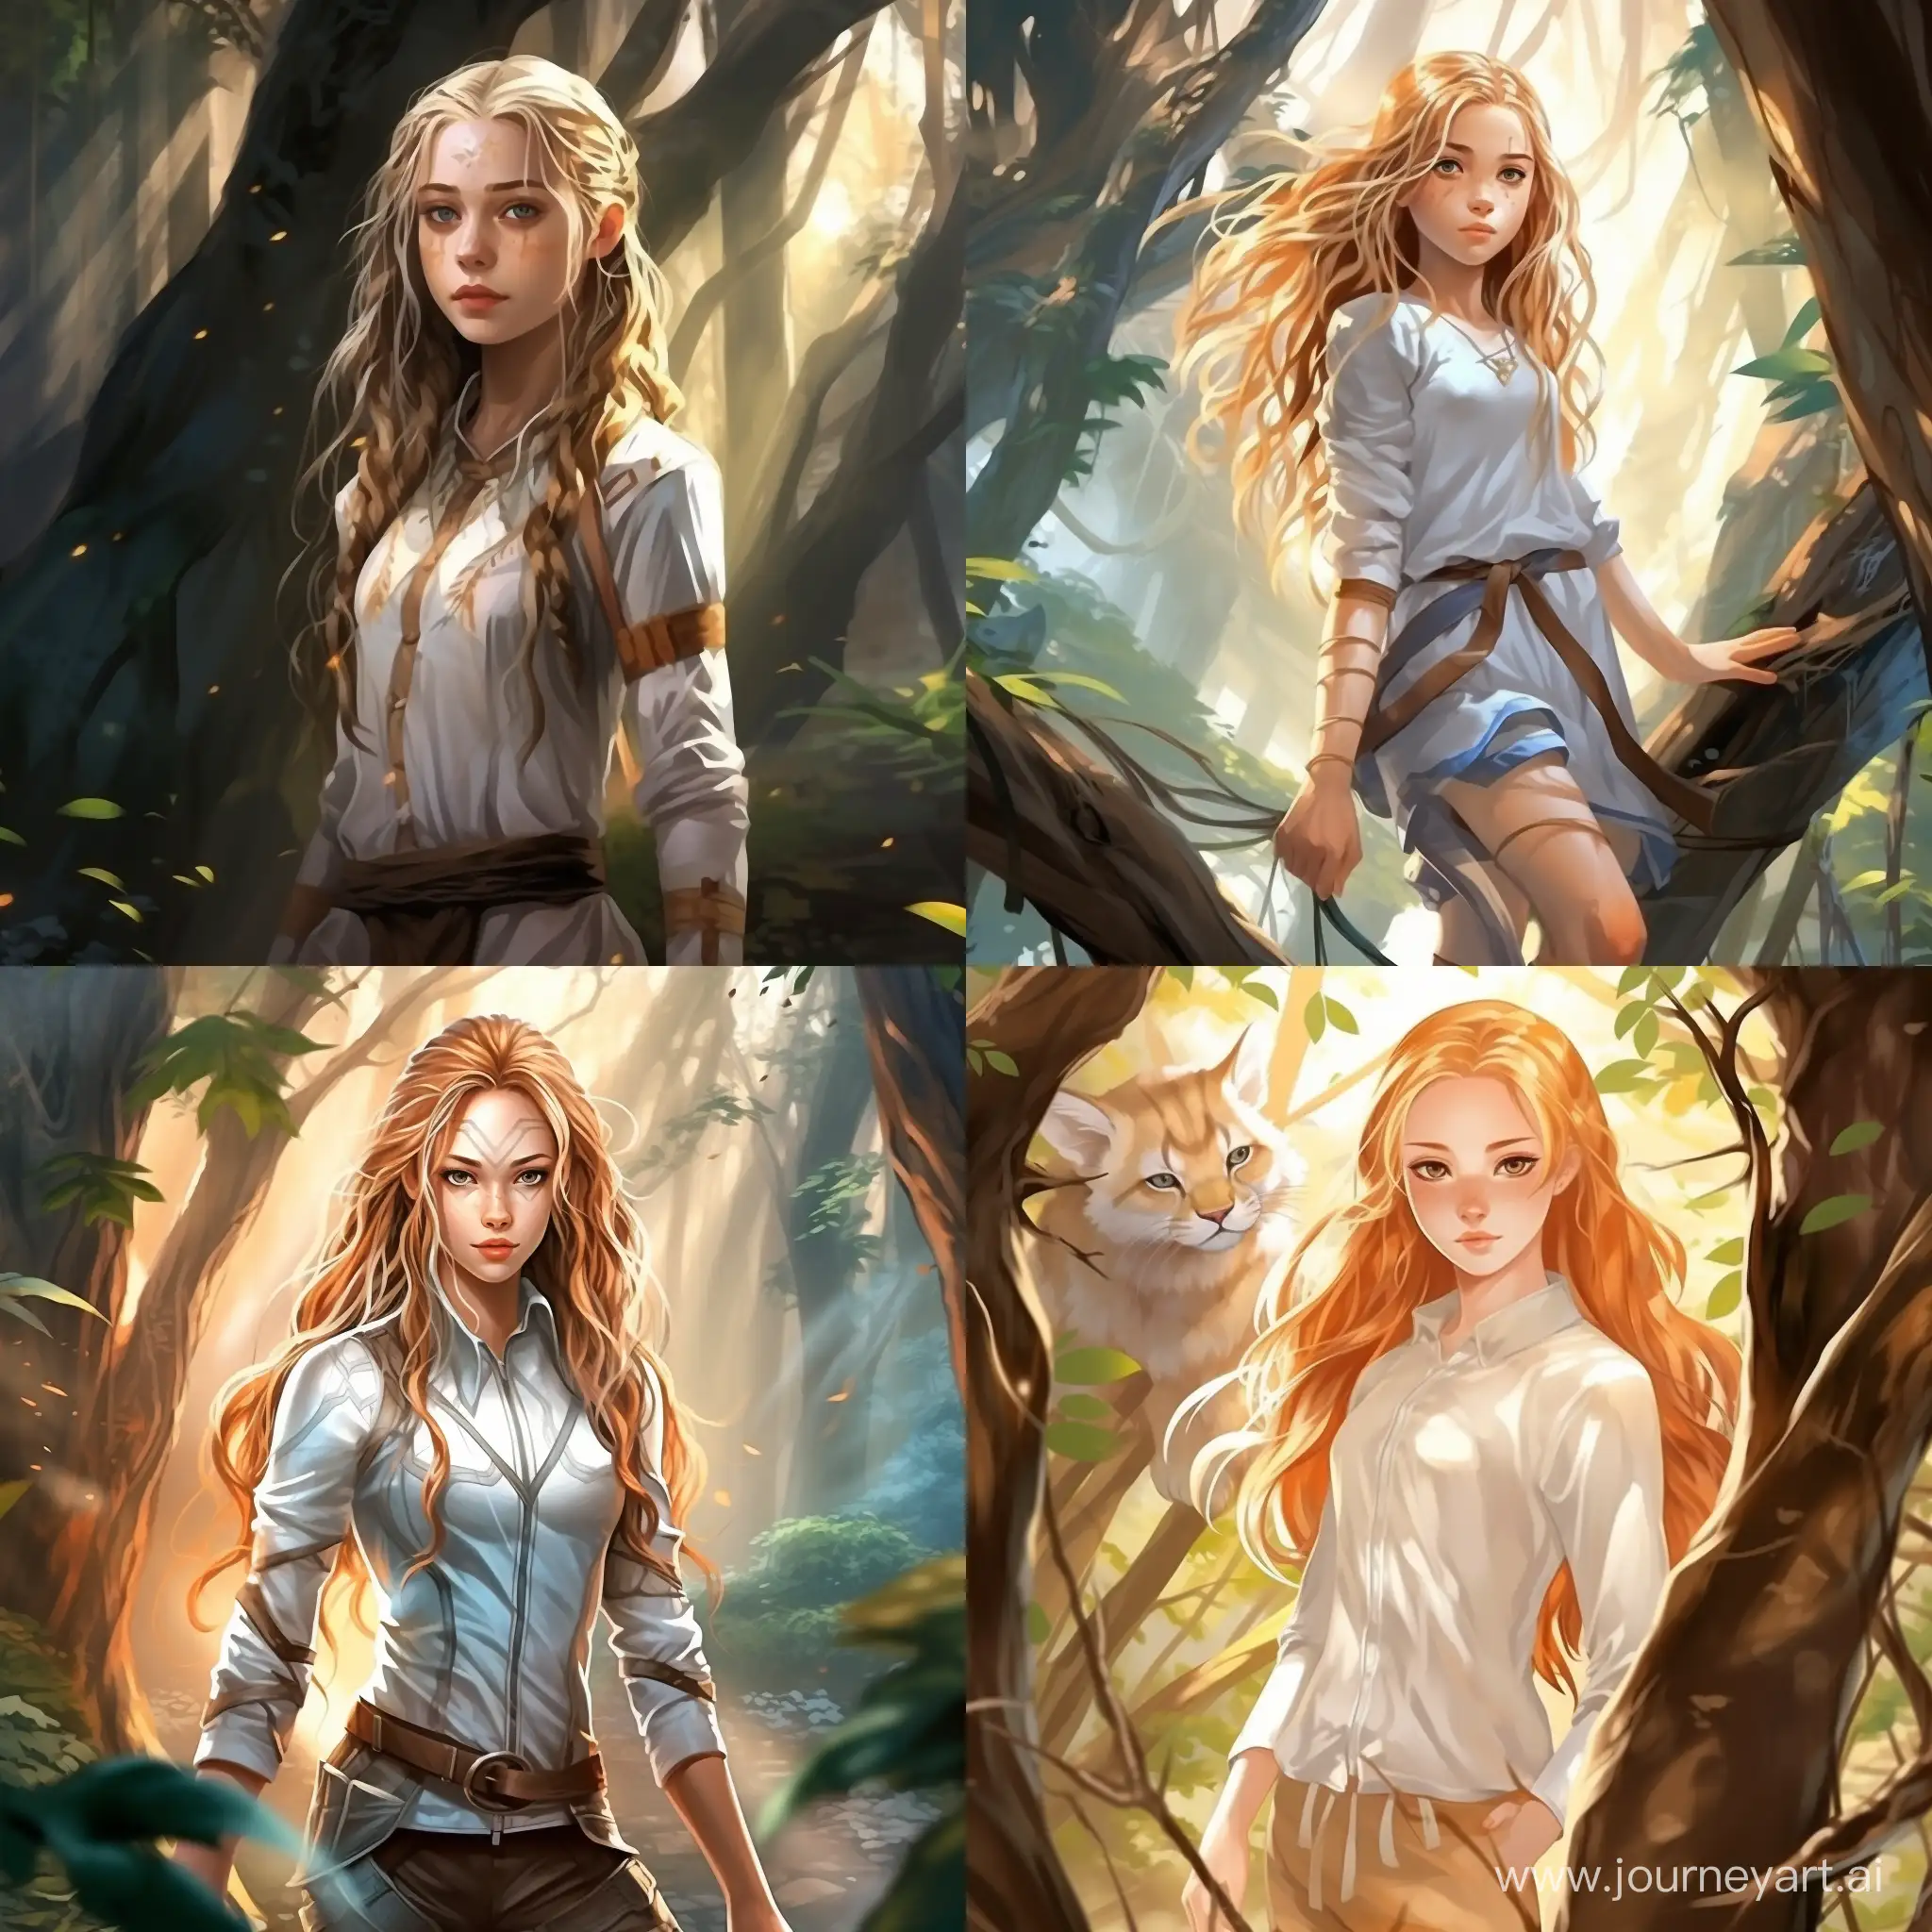 Adventurous-Teen-with-Golden-Hair-AvatarStyle-Forest-Journey